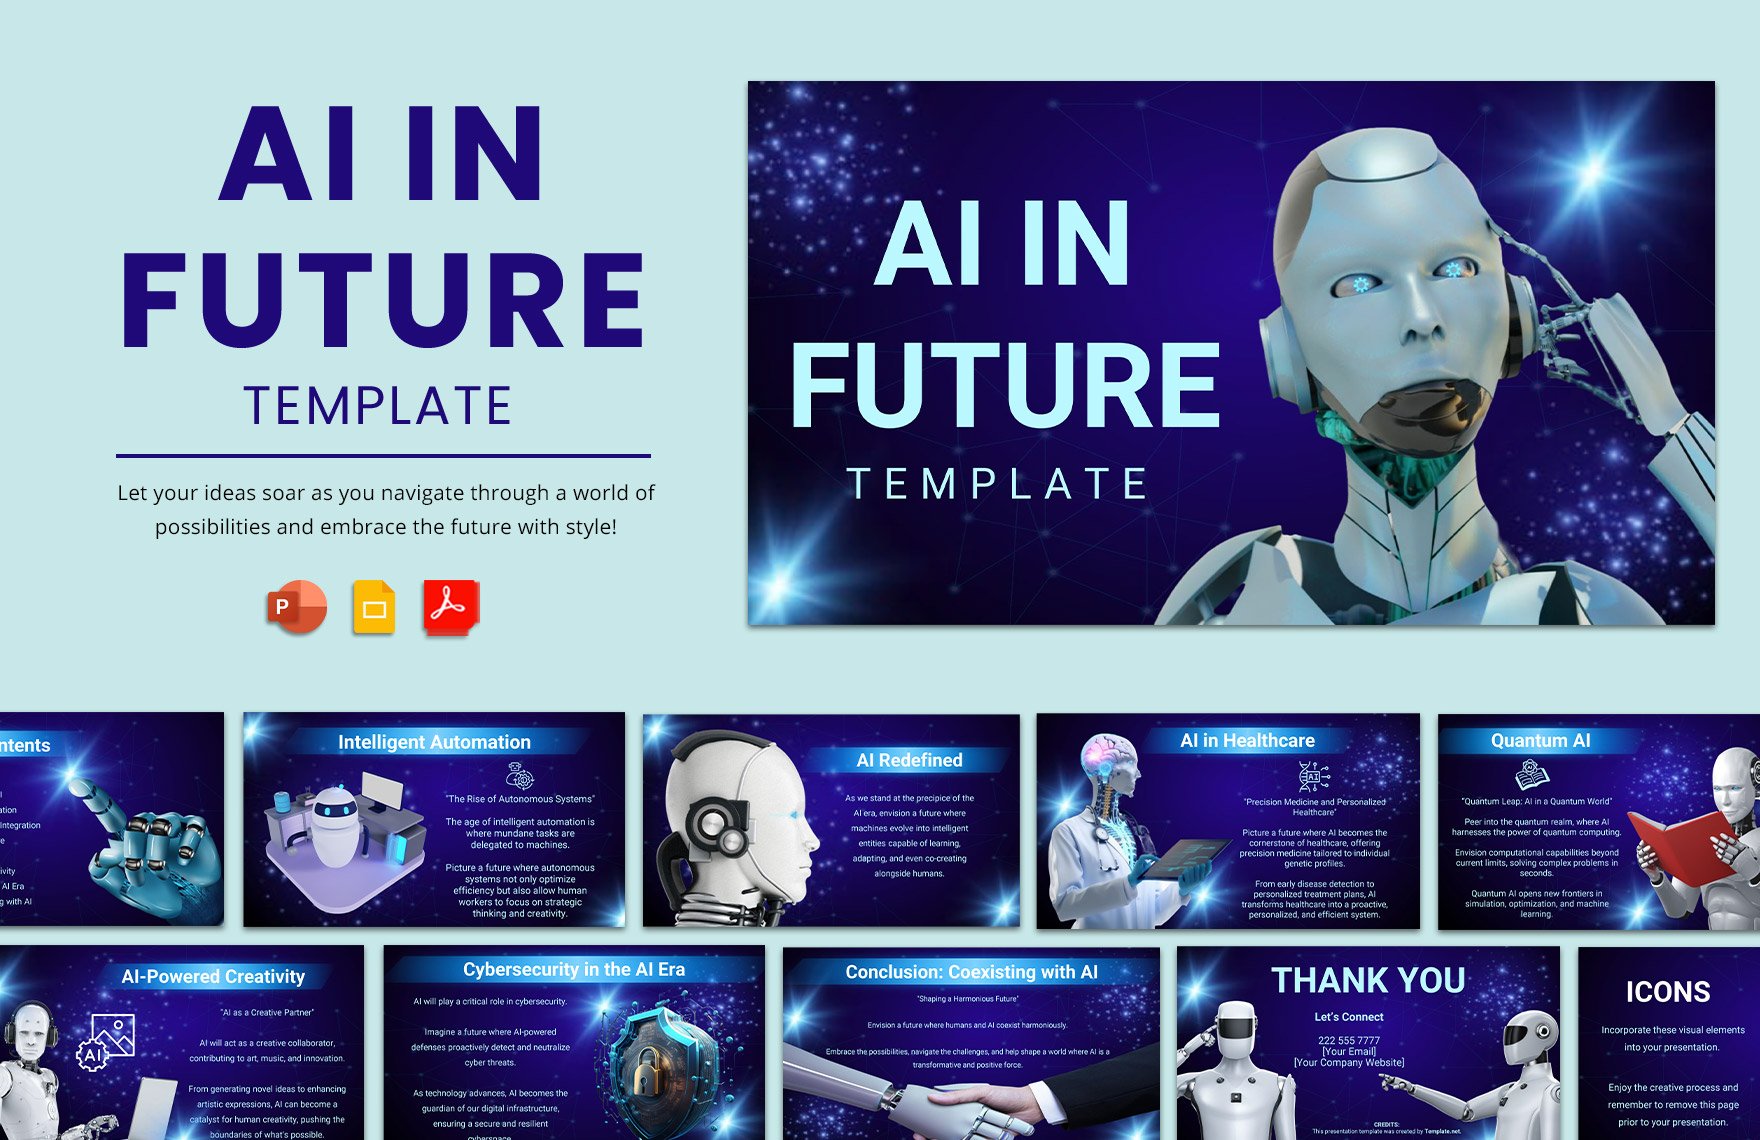 AI in Future Template